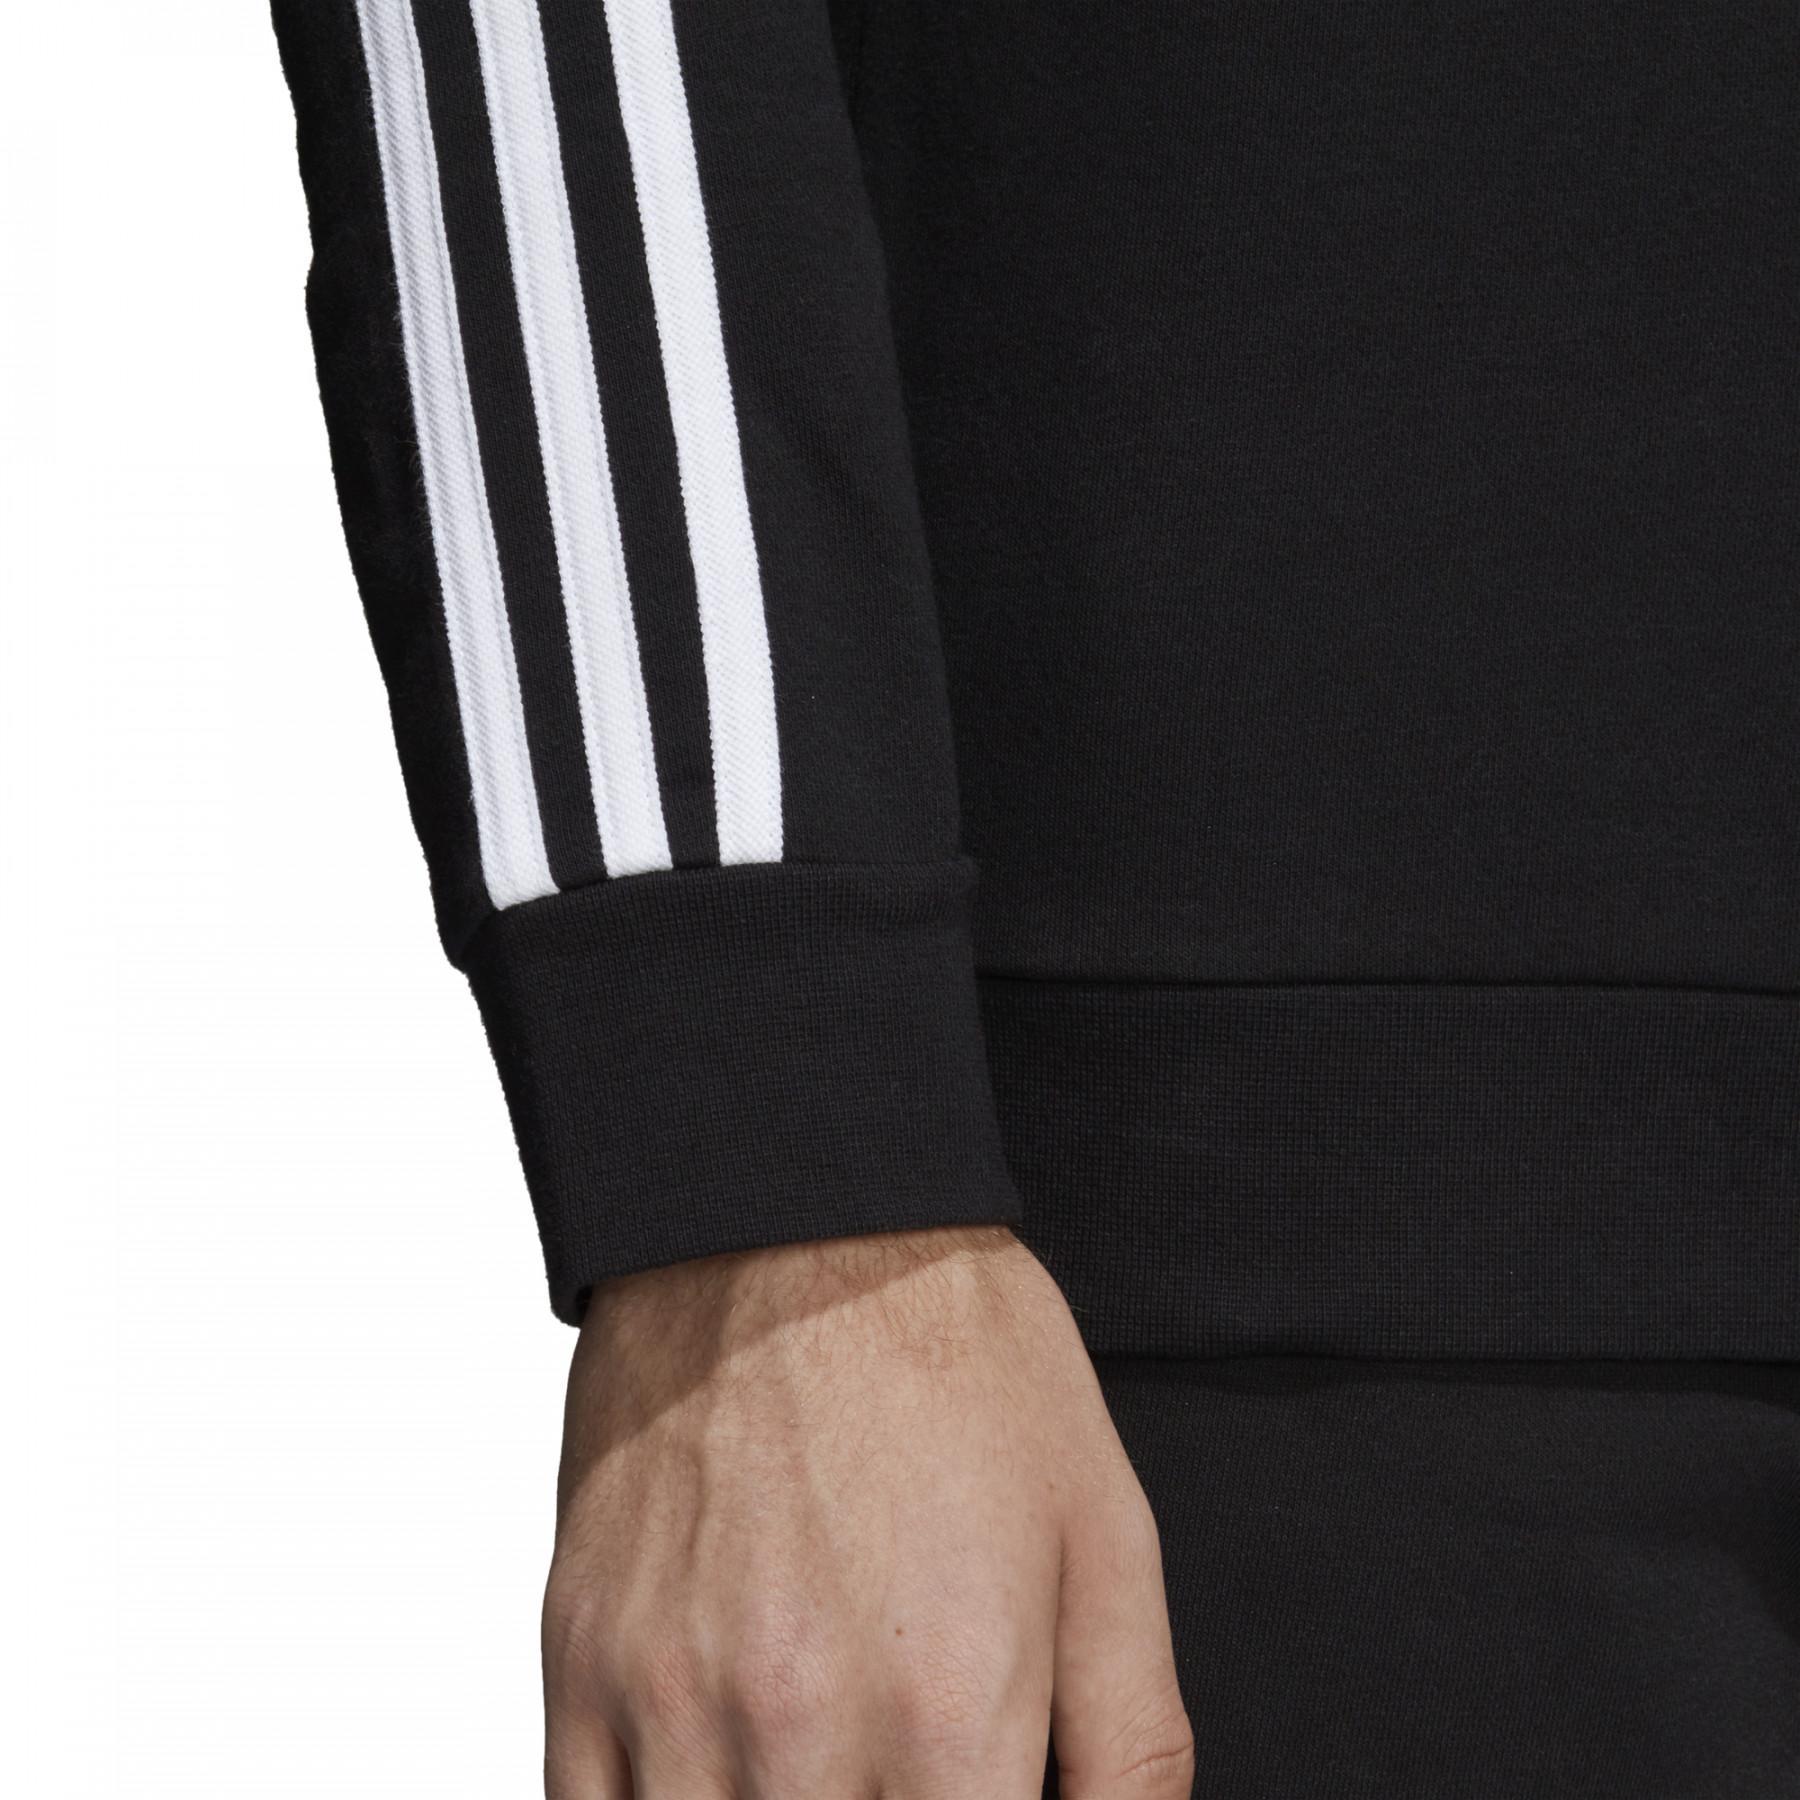 Sweatshirt adidas 3-Stripes Crewneck Black